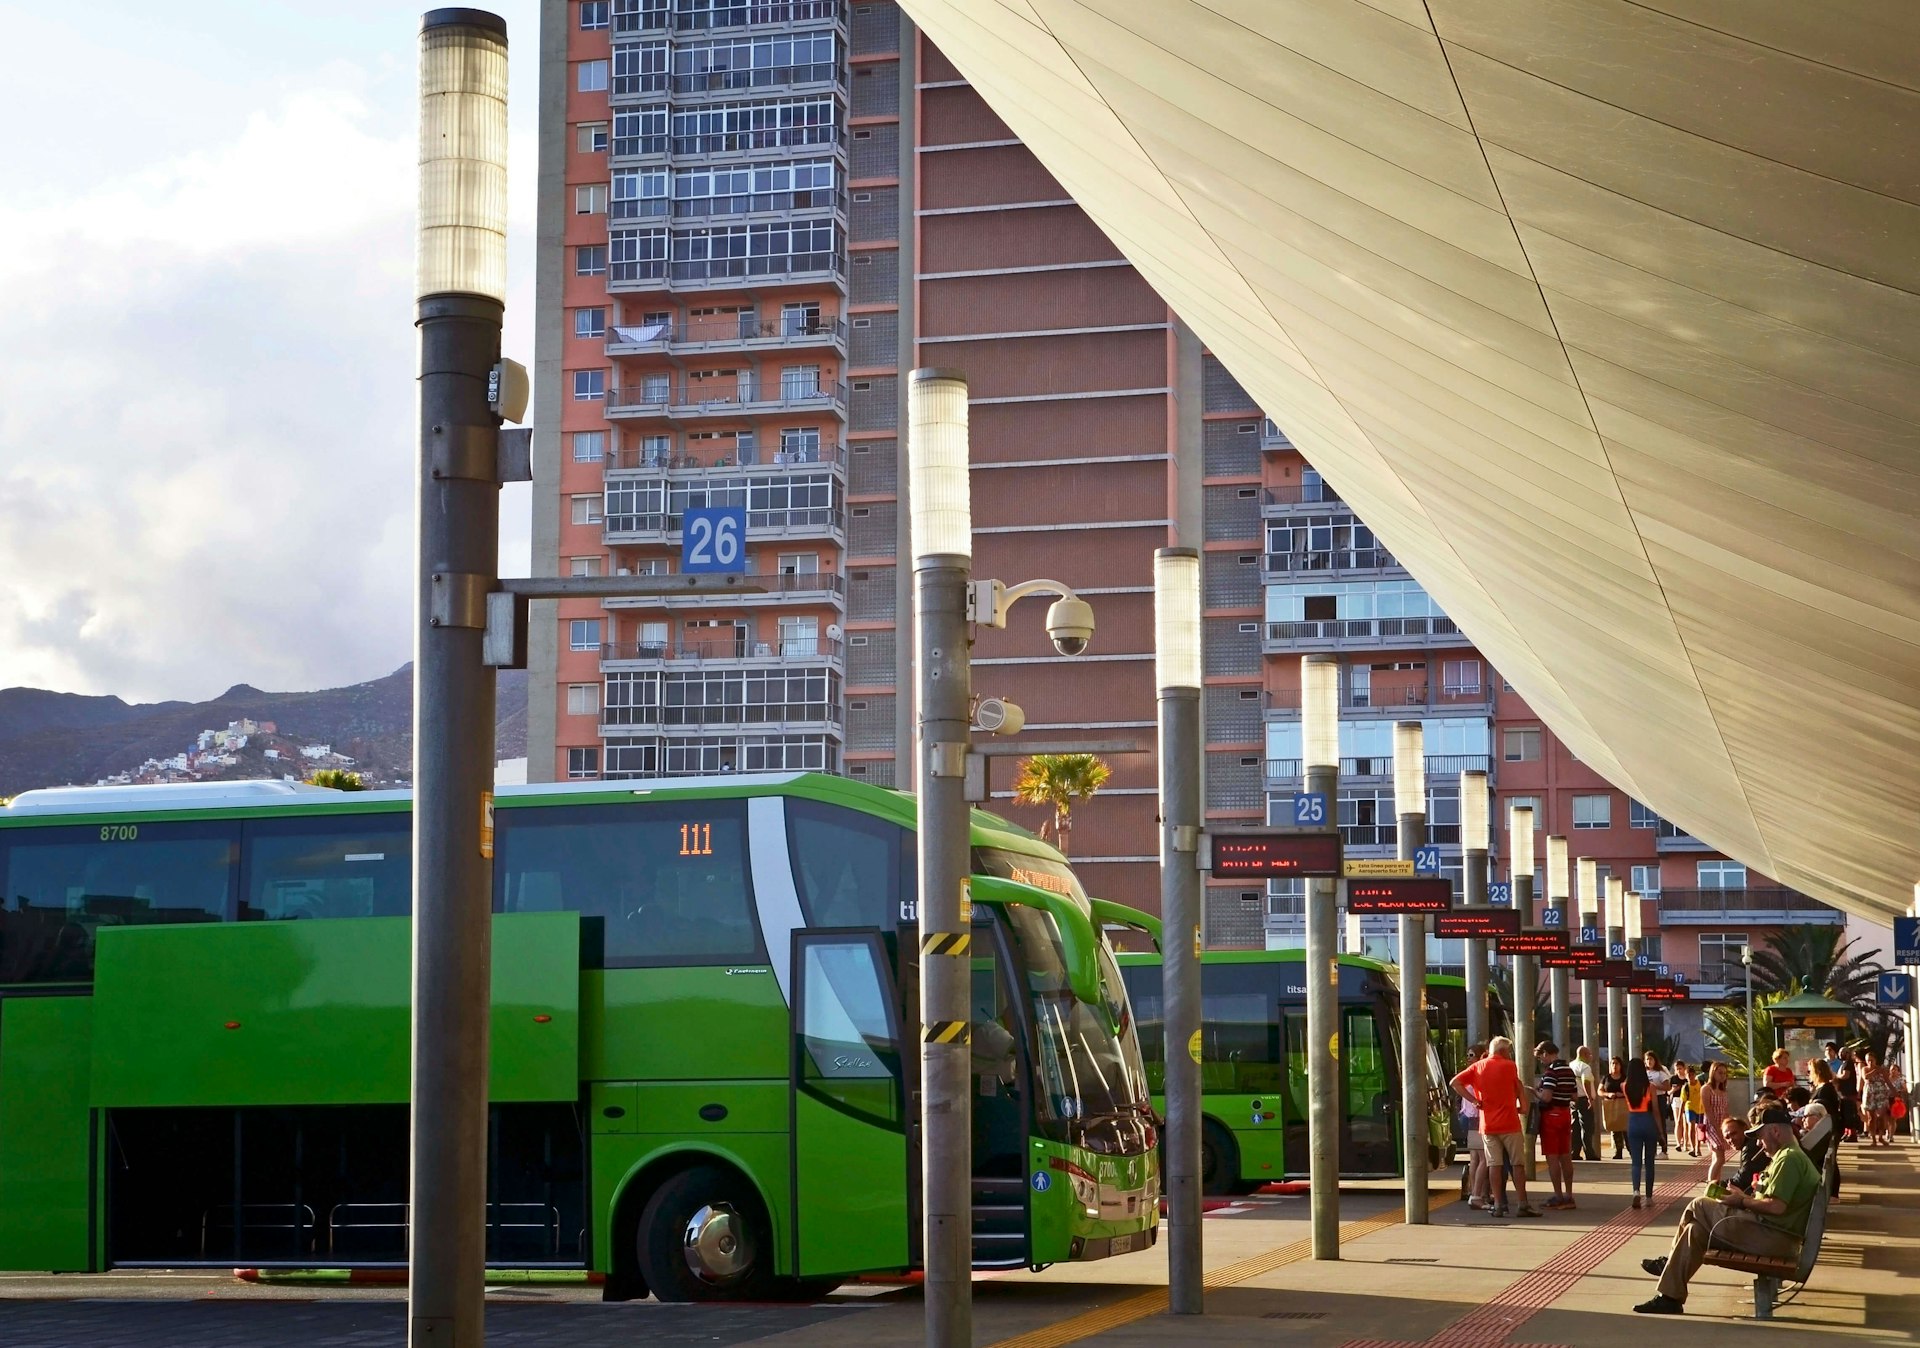 Titsa buses at the Central Bus Station of Santa Cruz de Tenerife